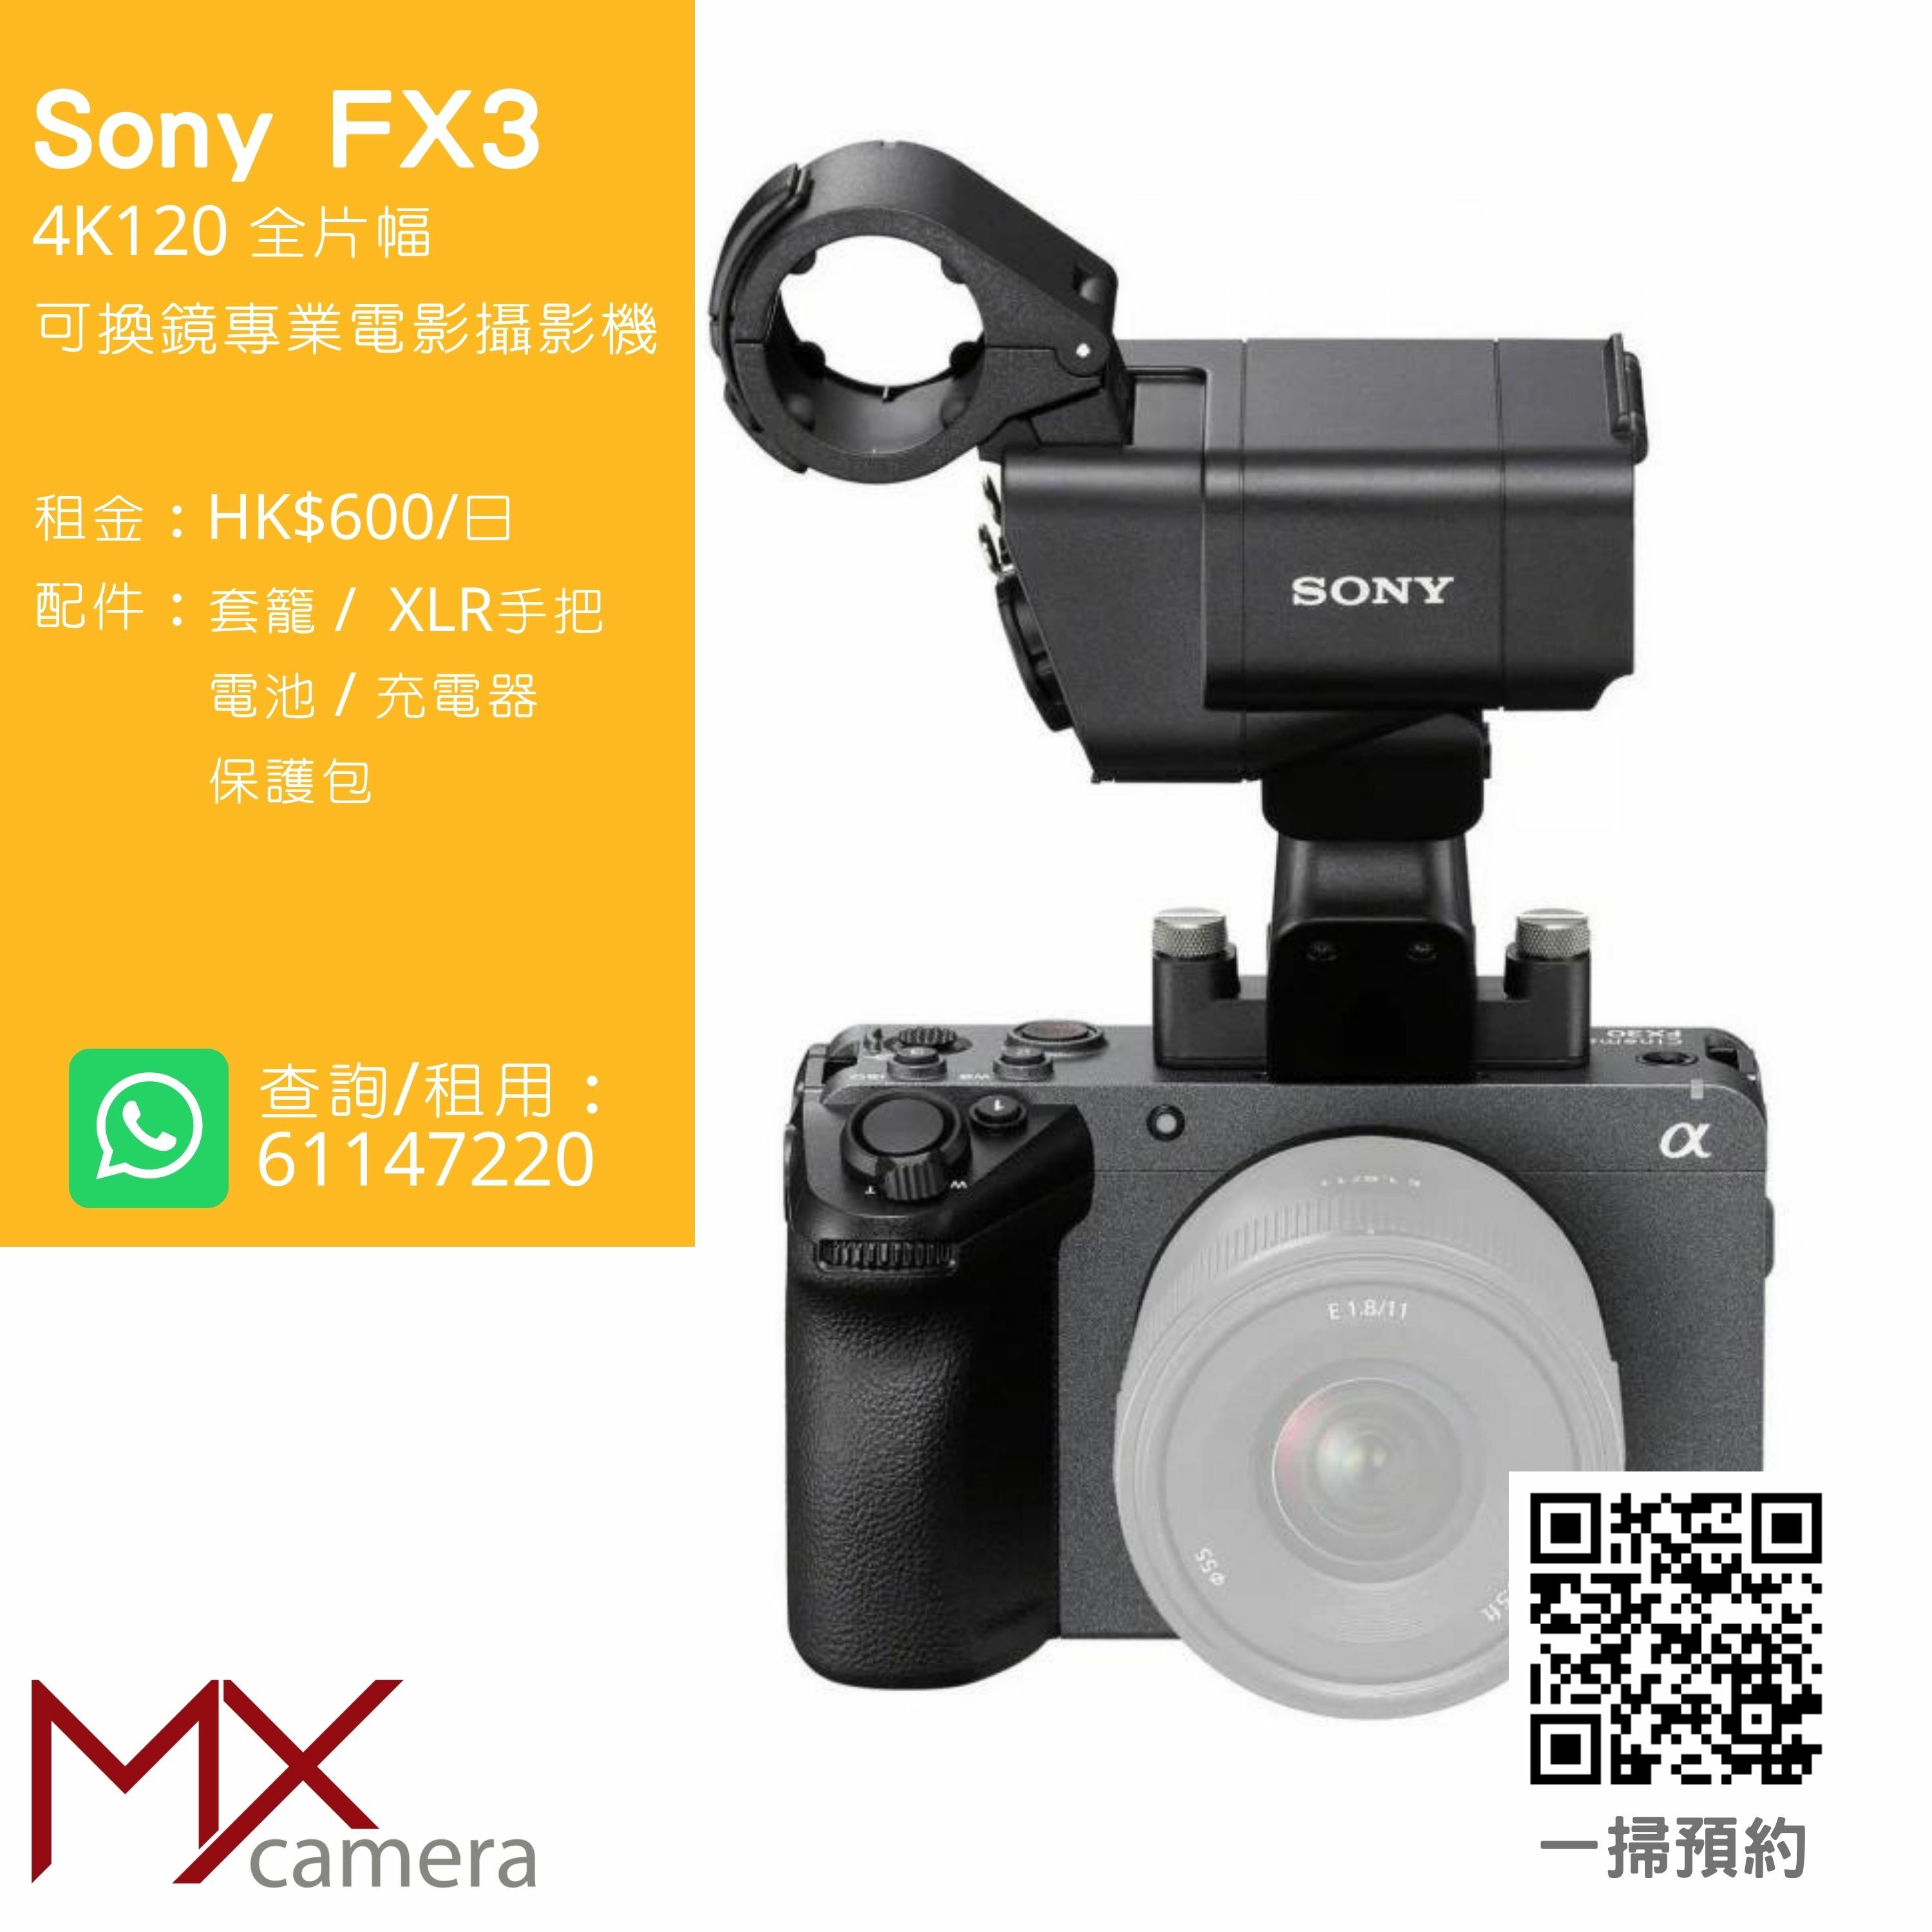 Sony FX3 4K120 全片幅可換鏡專業電影攝影機(租借)